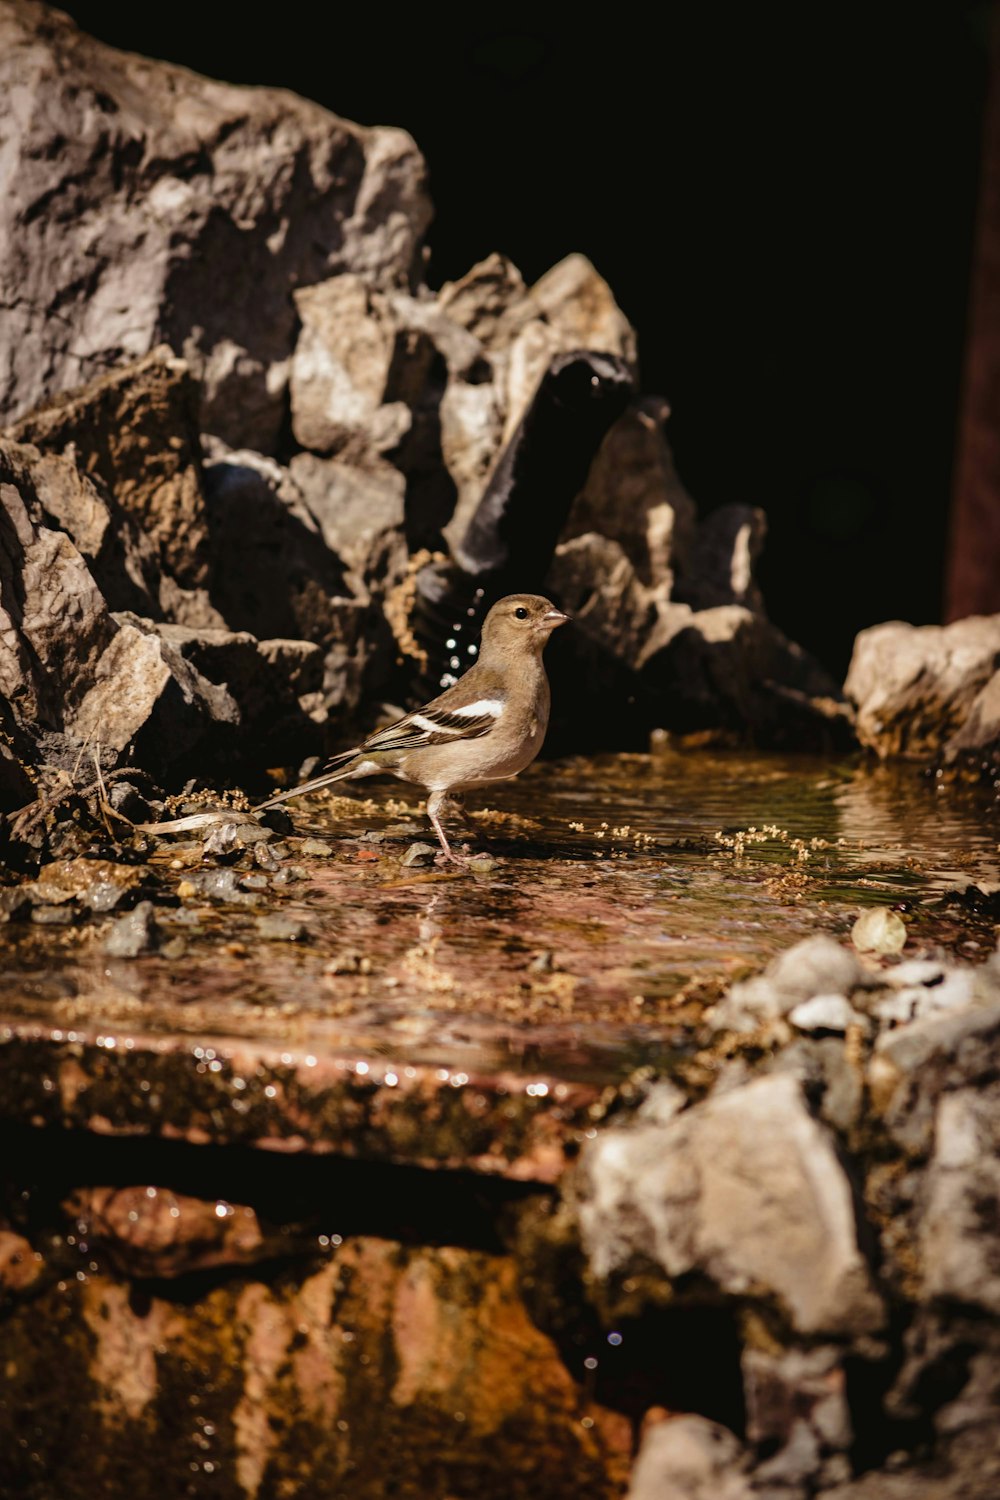 a bird standing in water